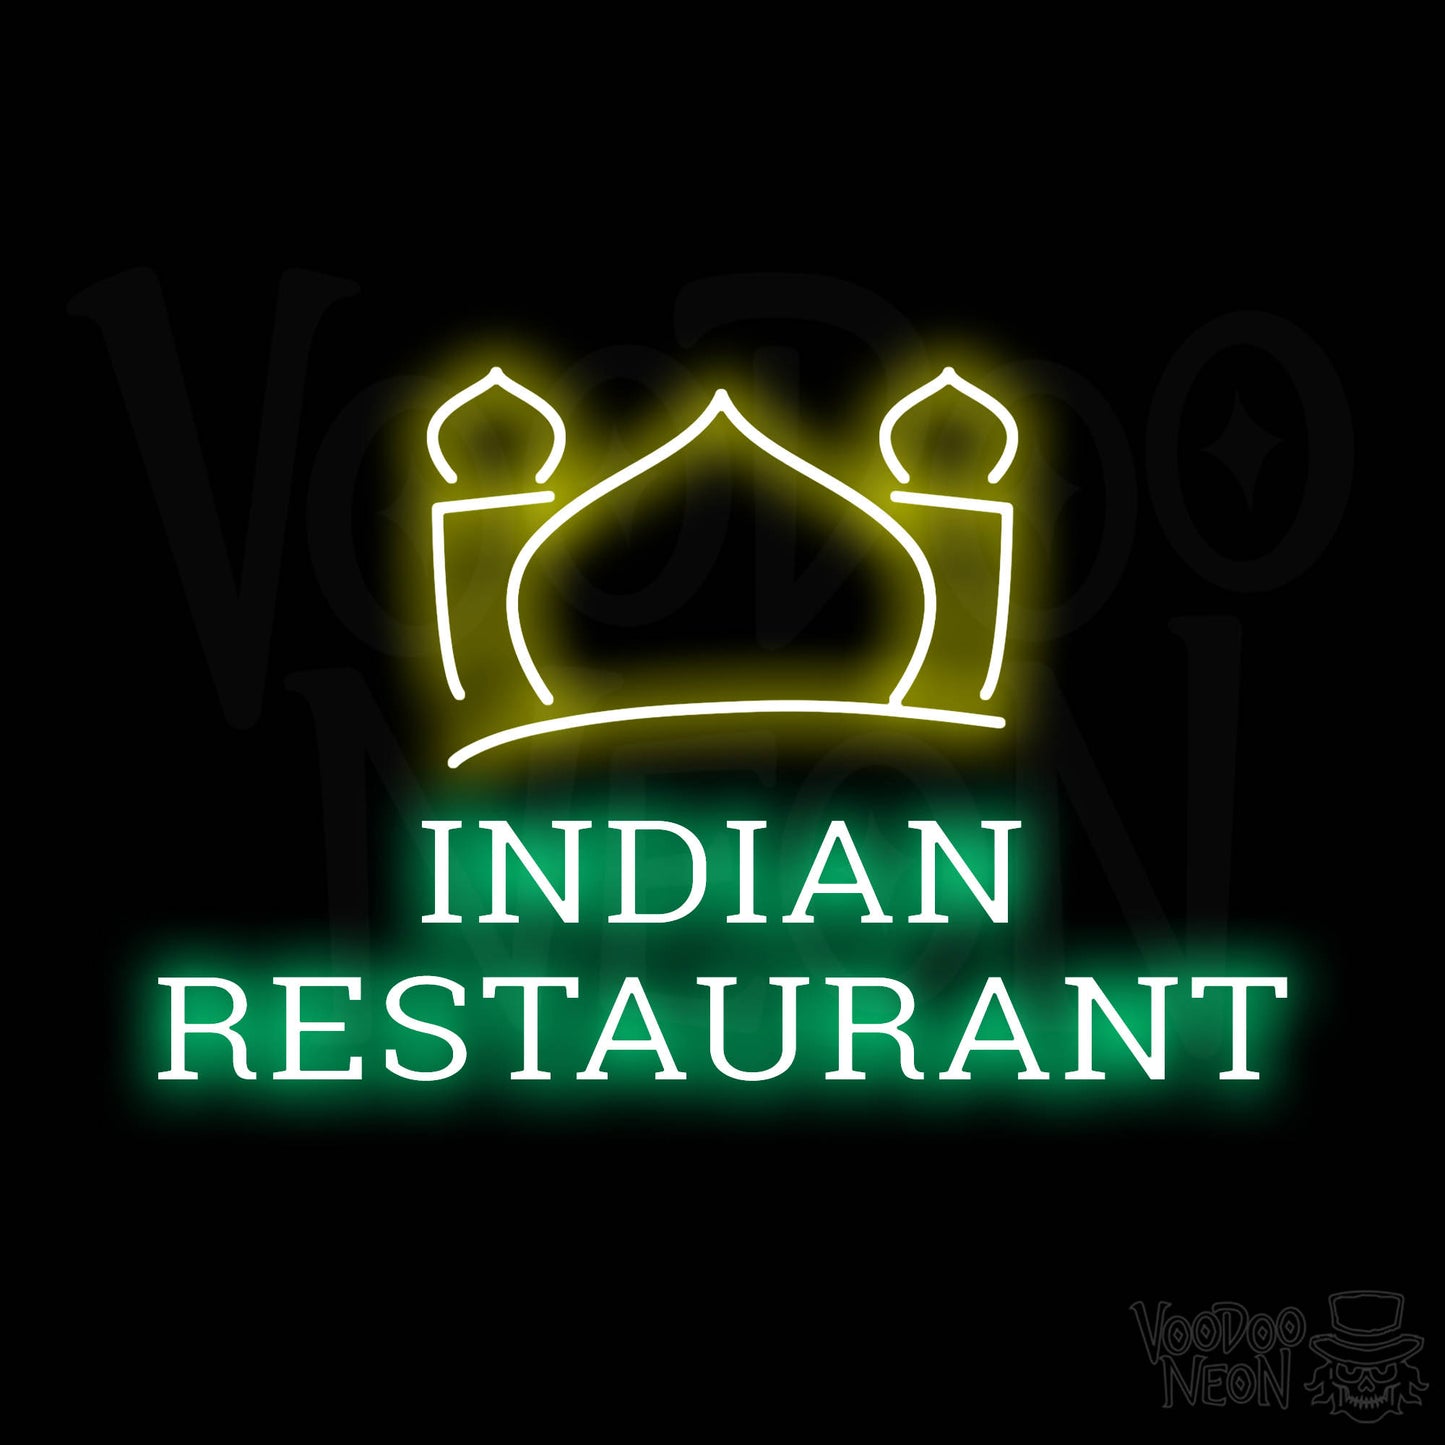 Indian Restaurant LED Neon - Multi-Color